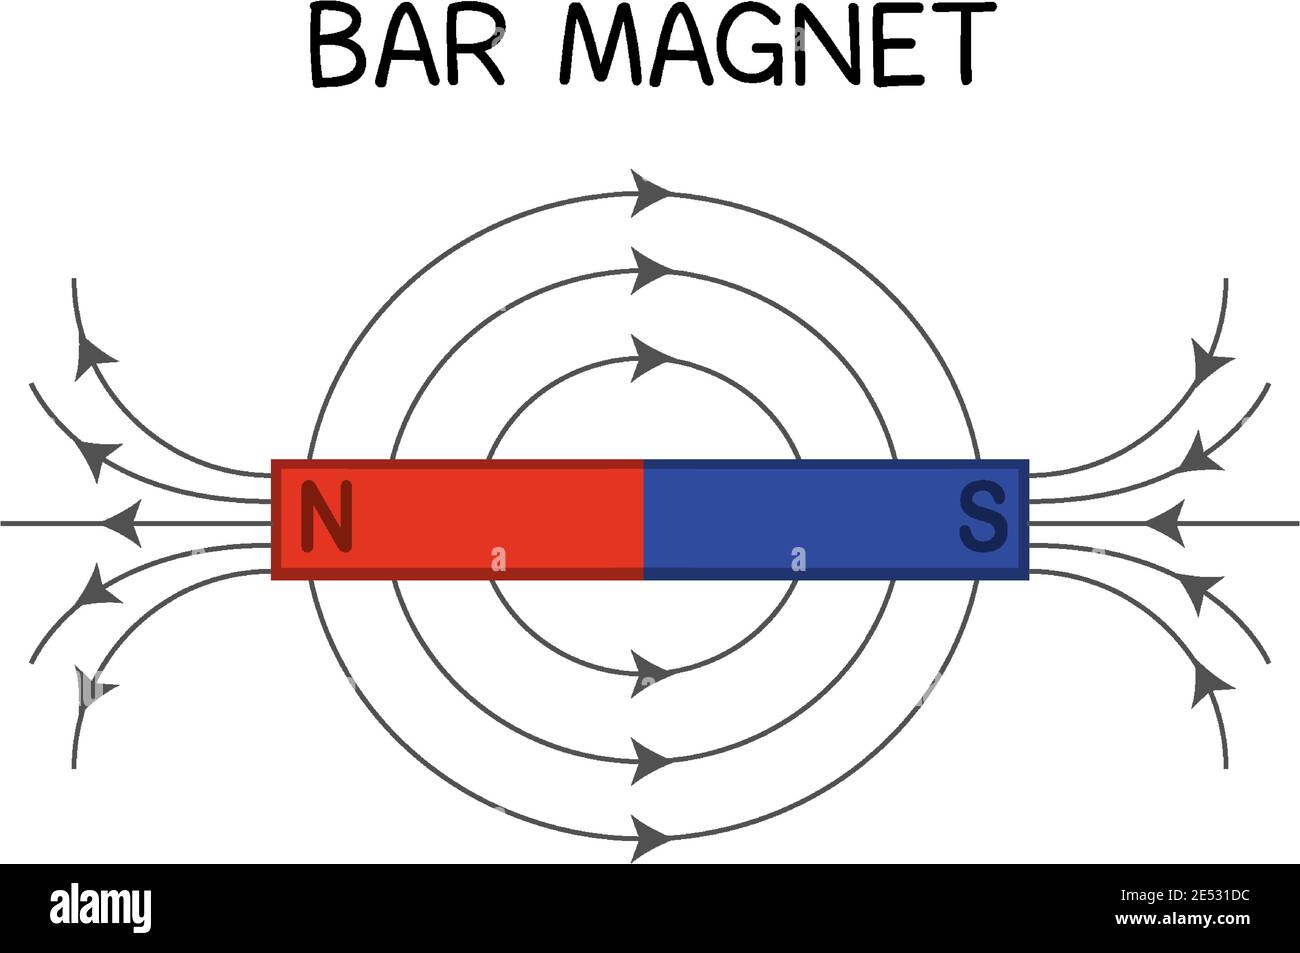 Bar magnet diagram for education illustration Stock Vector Image & Art -  Alamy